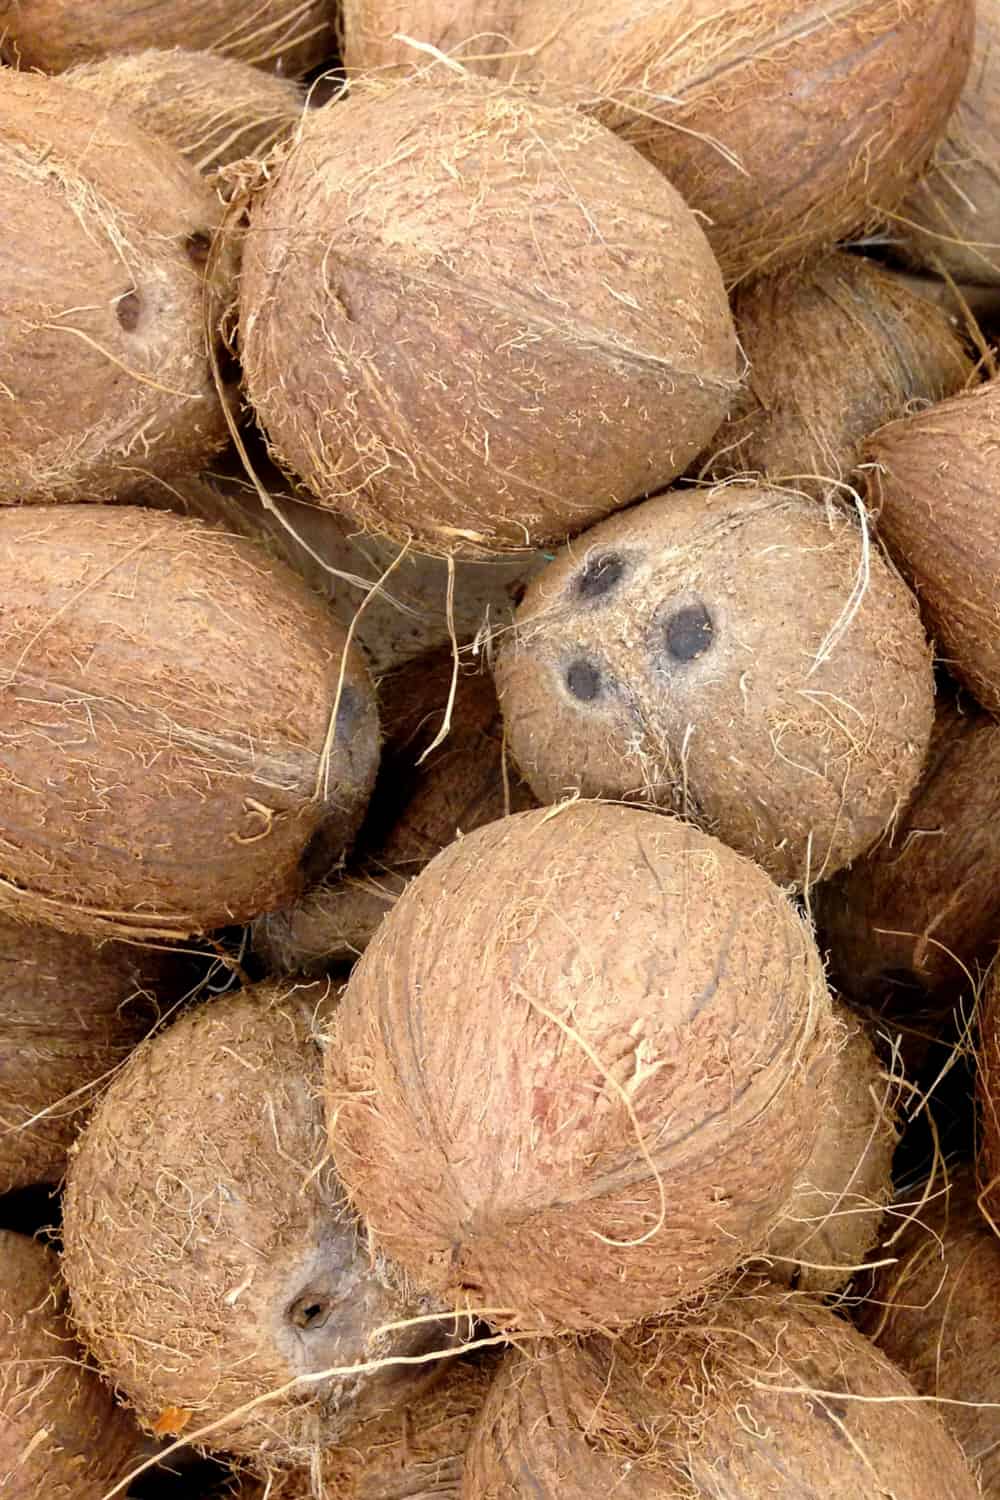 Brown Florida Coconuts - USDA Organic